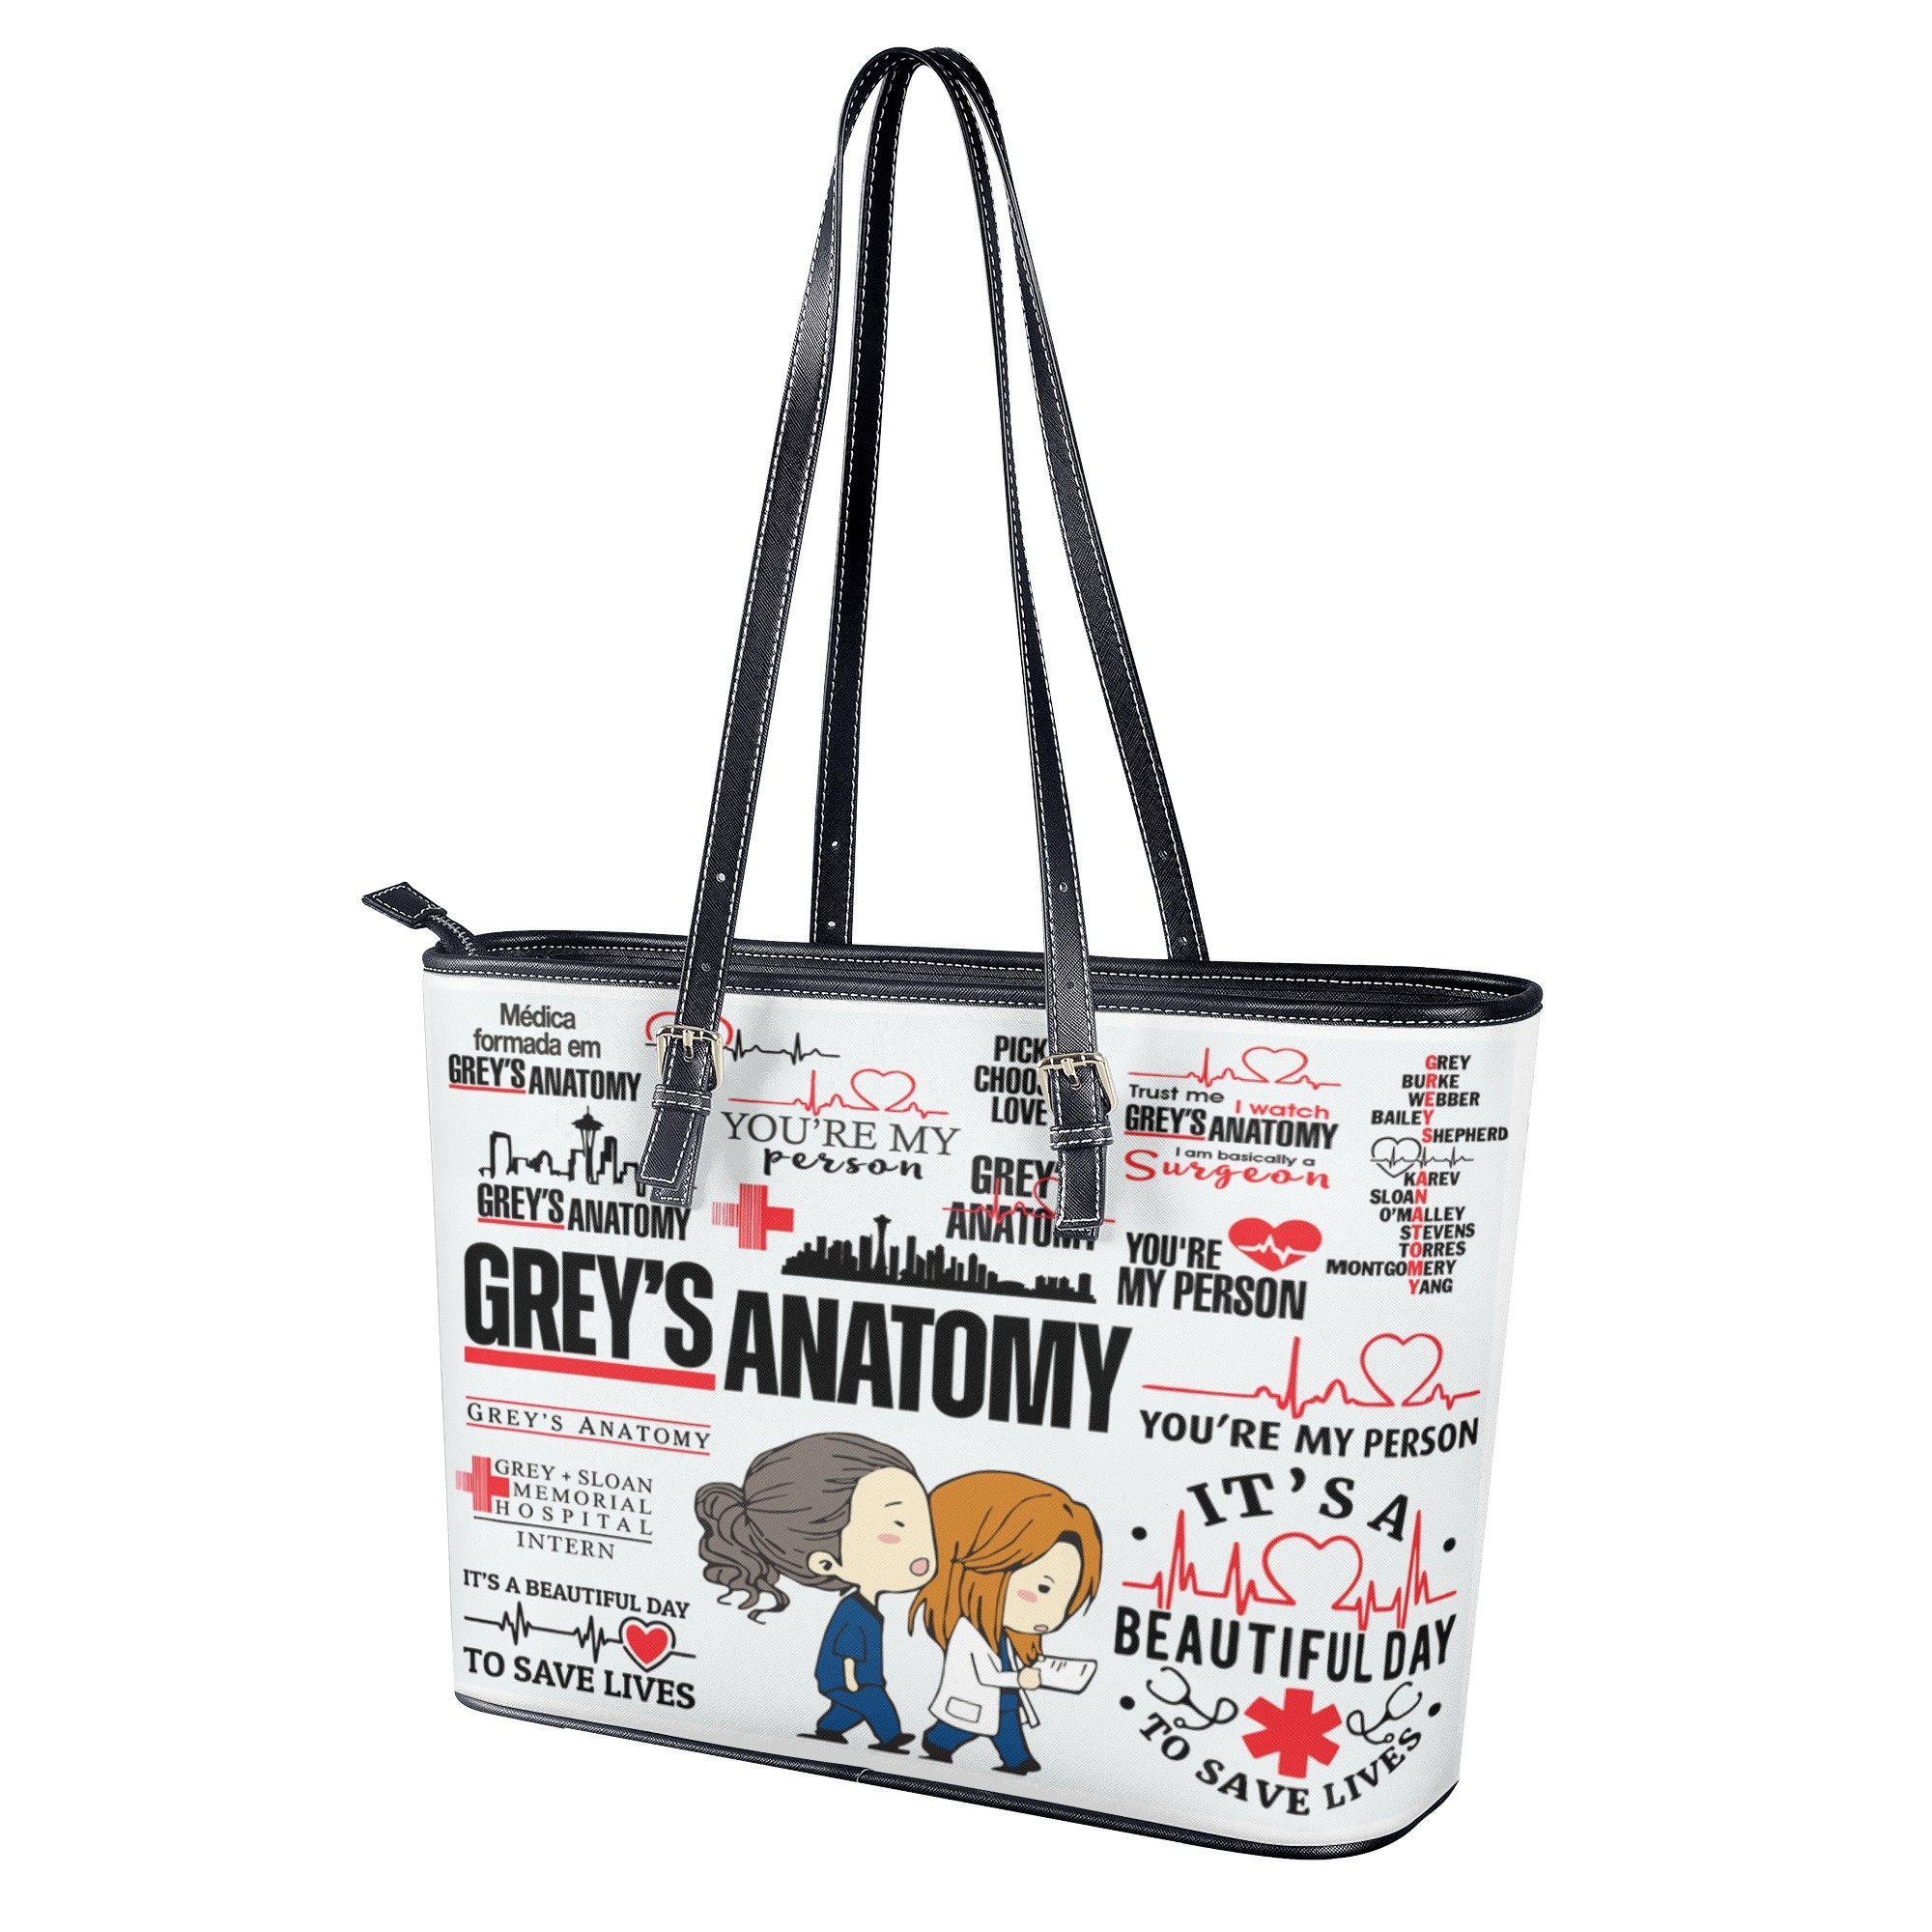 Grey's Anatomy Women Leather Handbag, Travel handbag